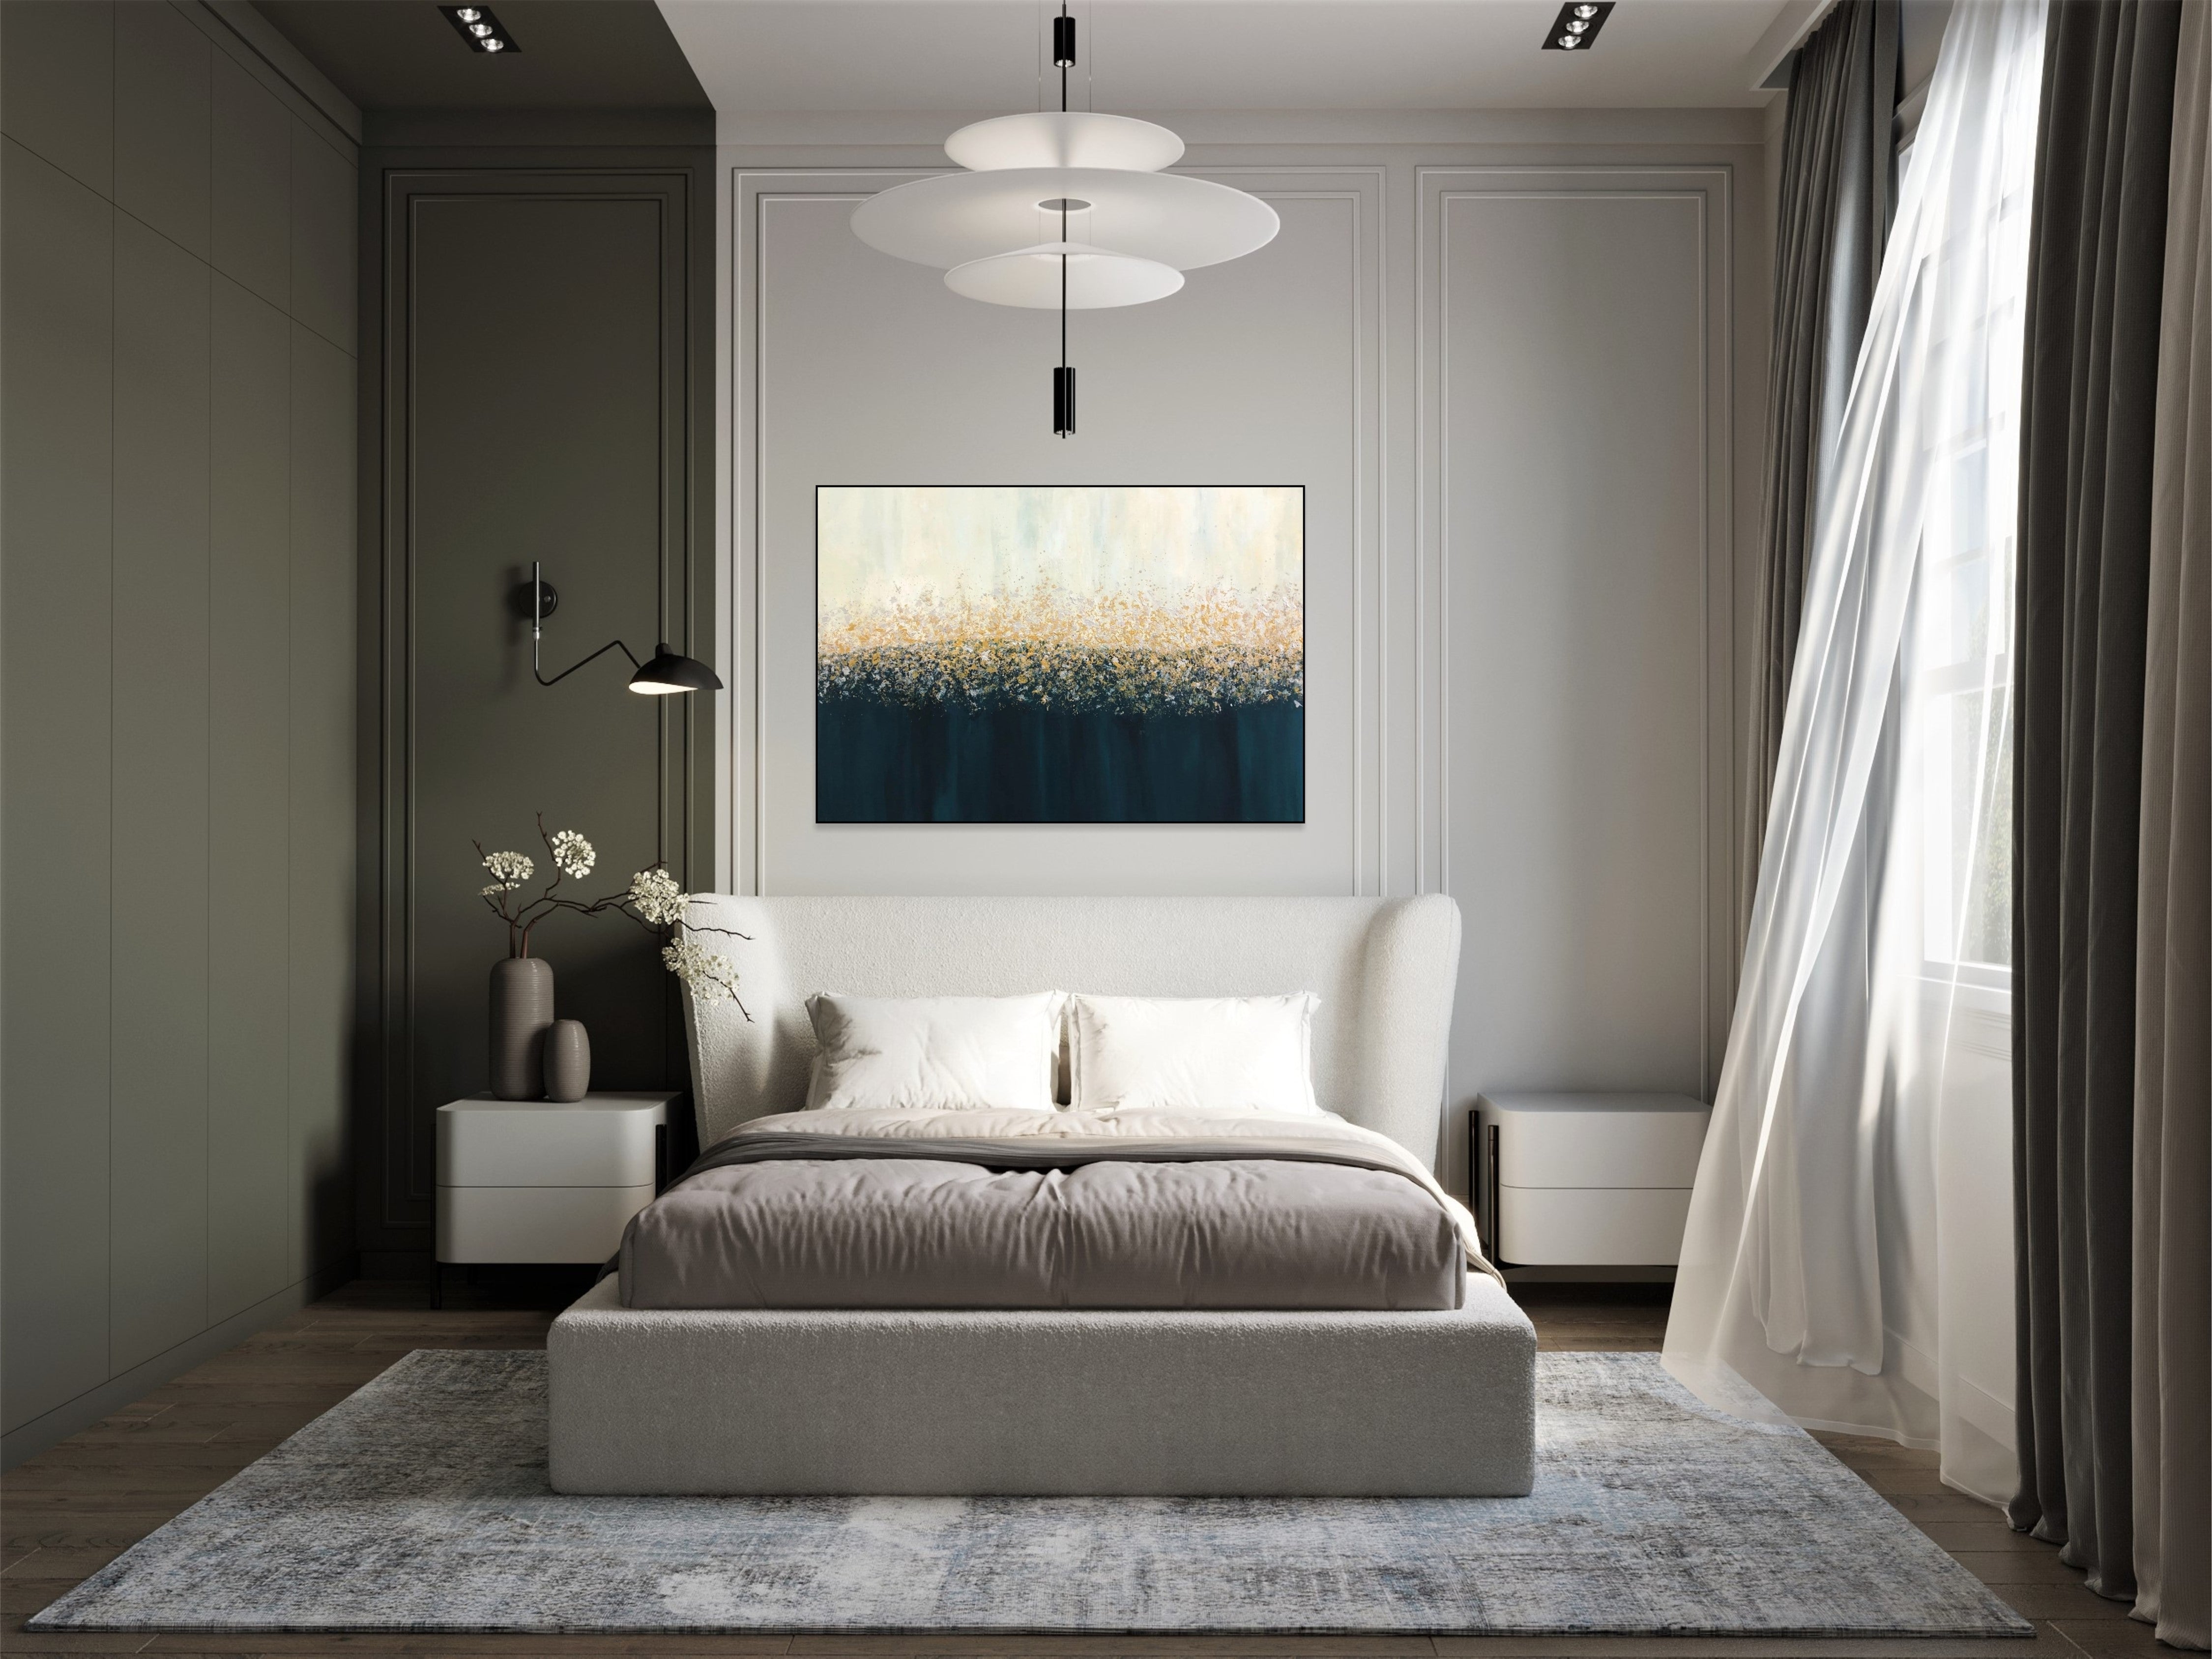 6 Bedroom Interior Paintings slider2-image-1